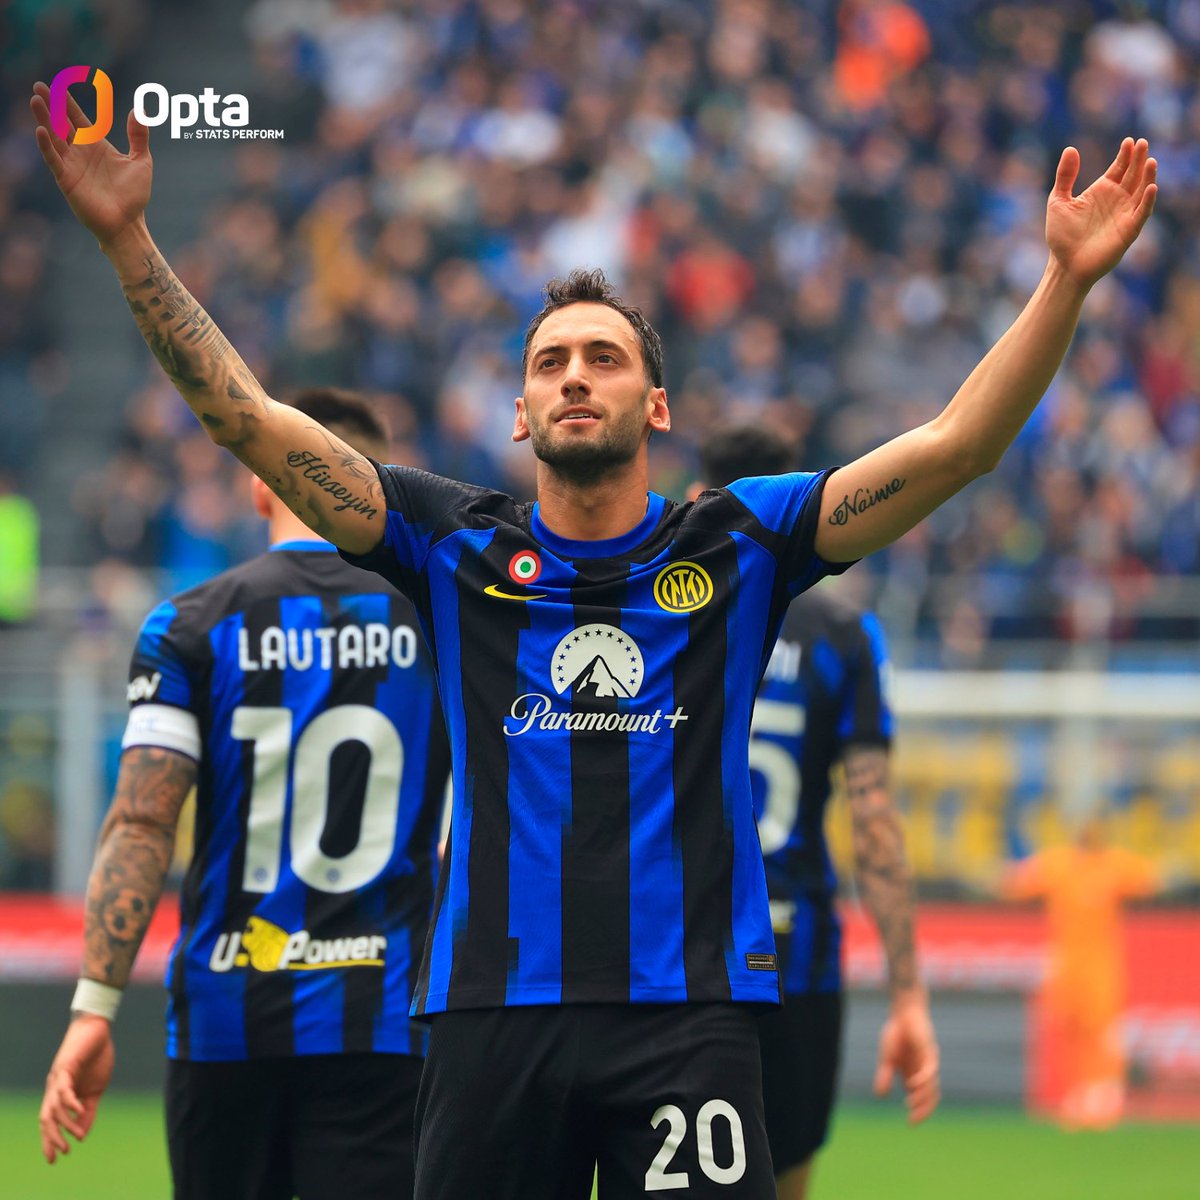 13 - Hakan Çalhanoglu has scored 13 goals in the current league season, the last midfielder to score more goals for Inter in a single Serie A campaign was Lothar Matthäus (16 in 1990/91). Star.

#InterTorino #SerieA